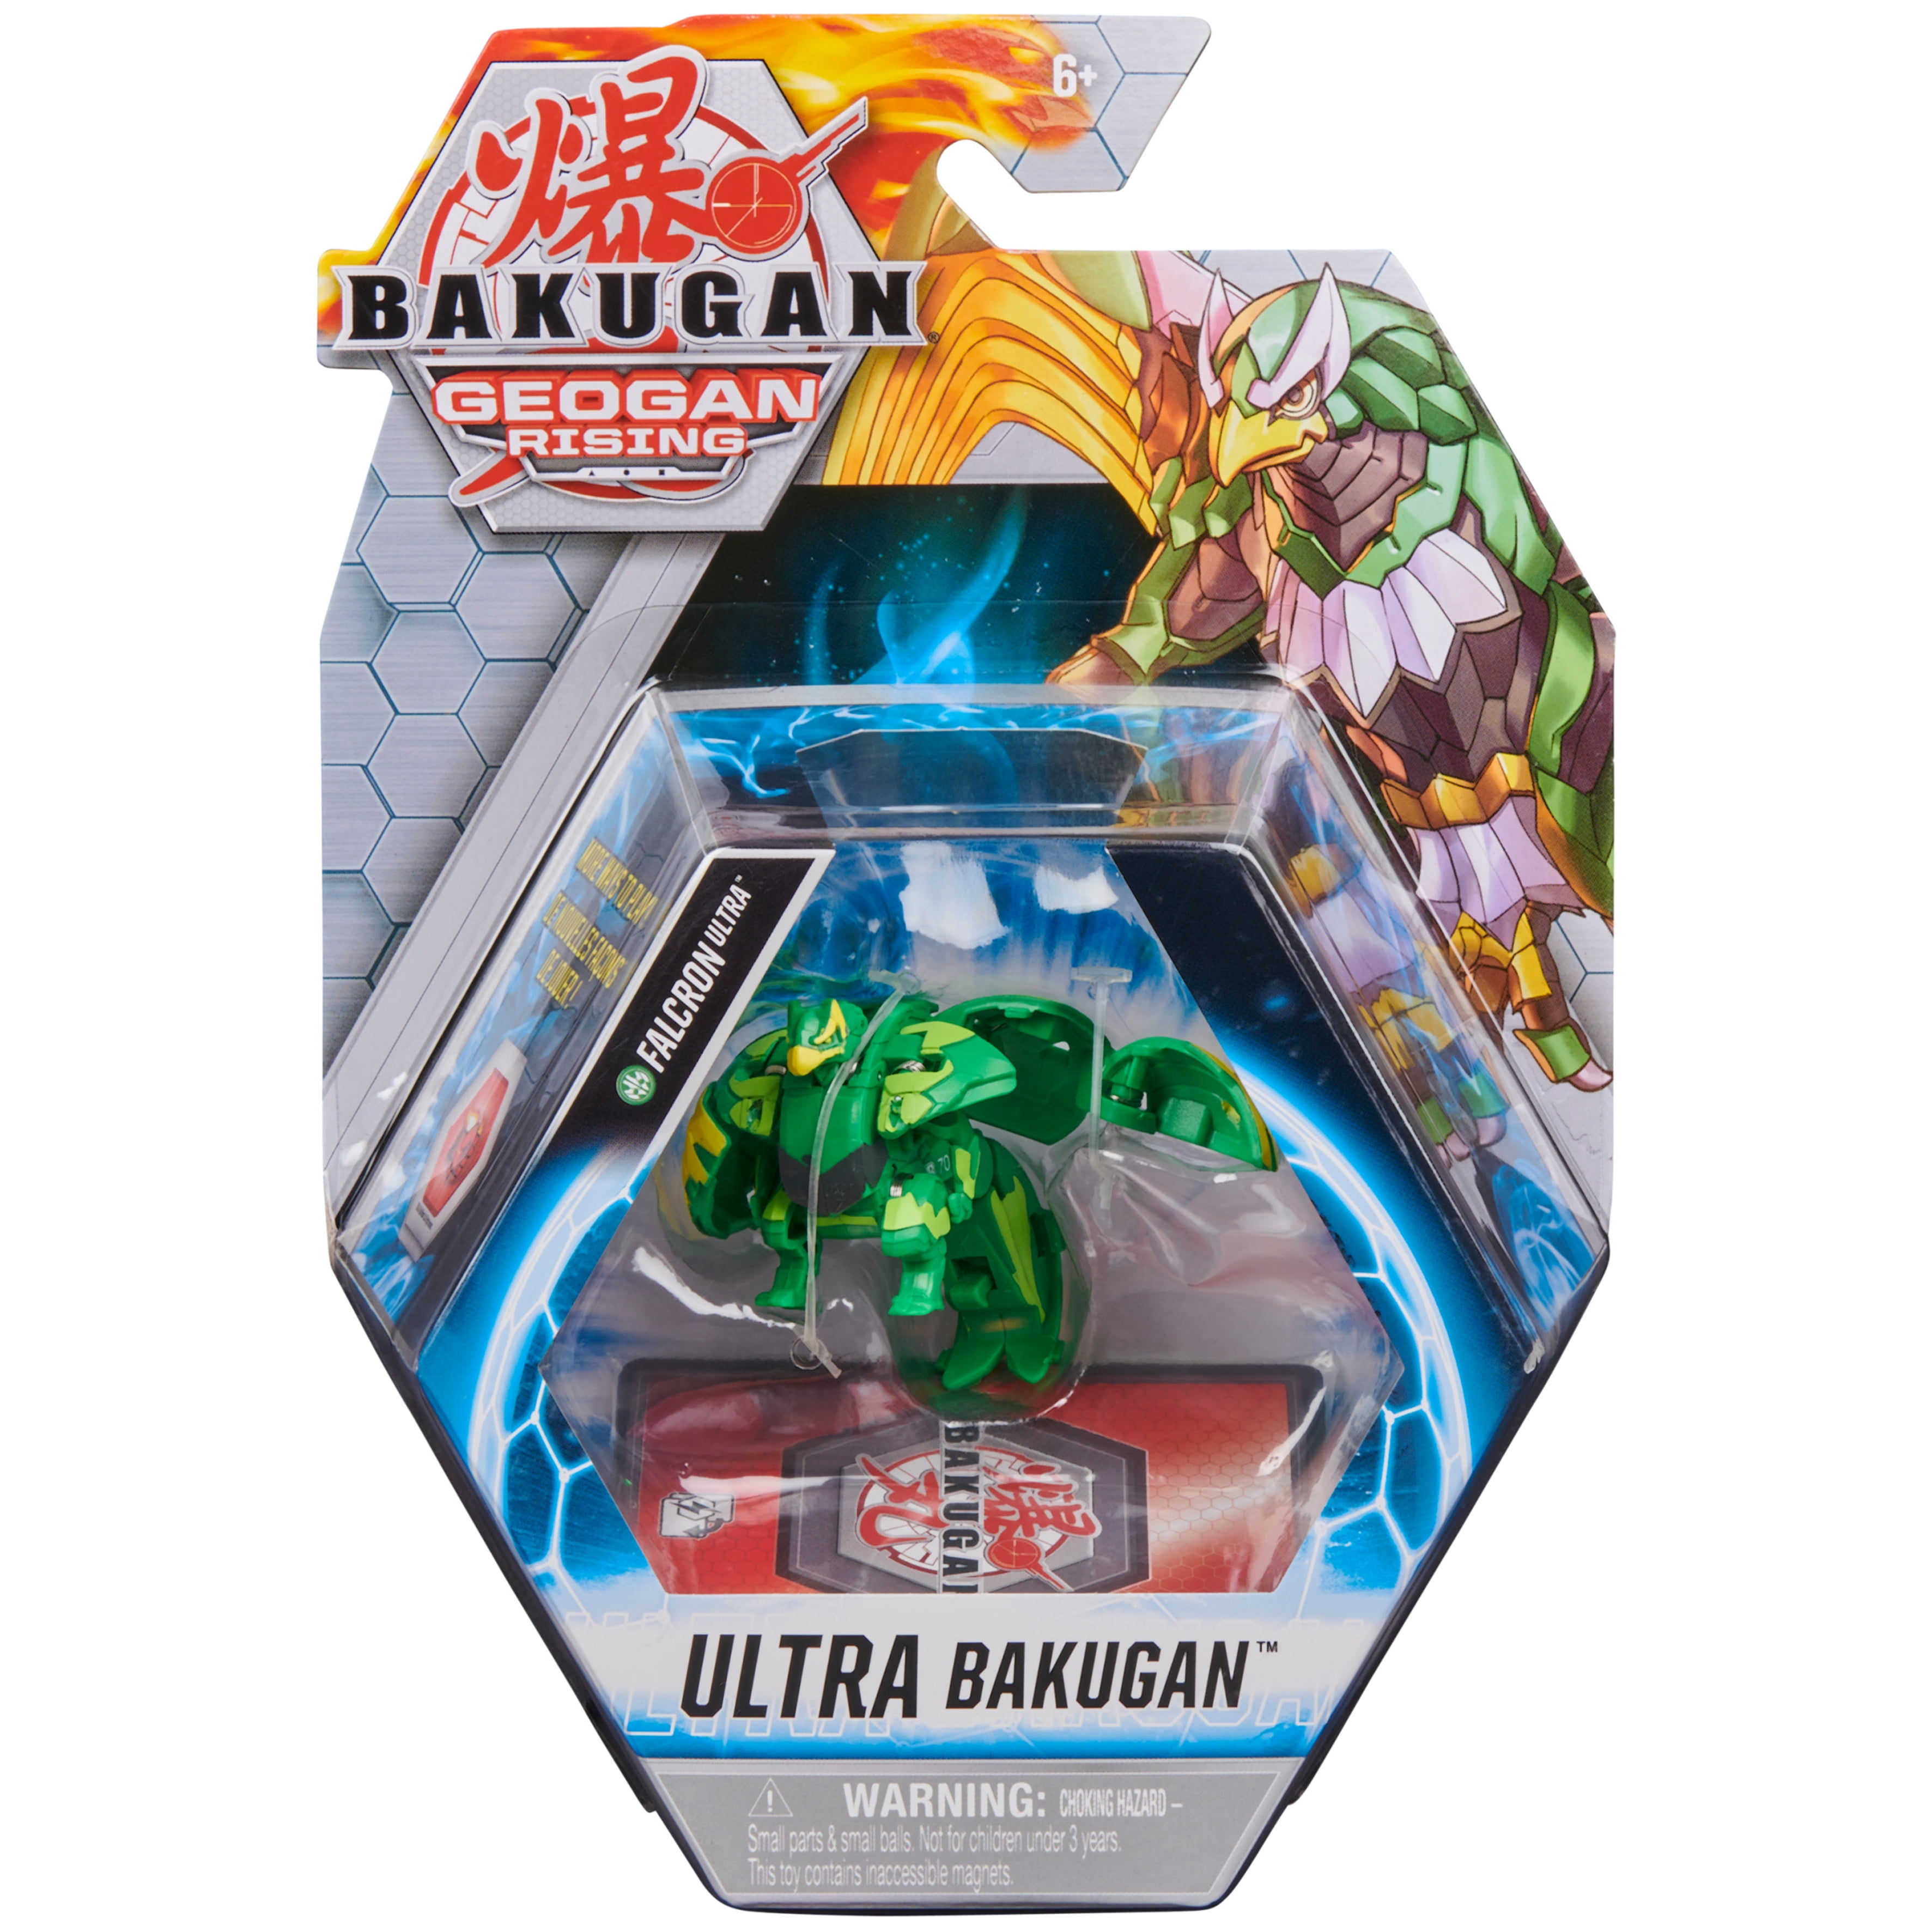 Spin Master Bakugan Geogan Rising Dragonoid Ultra Booster Box 3 Cards for sale online 